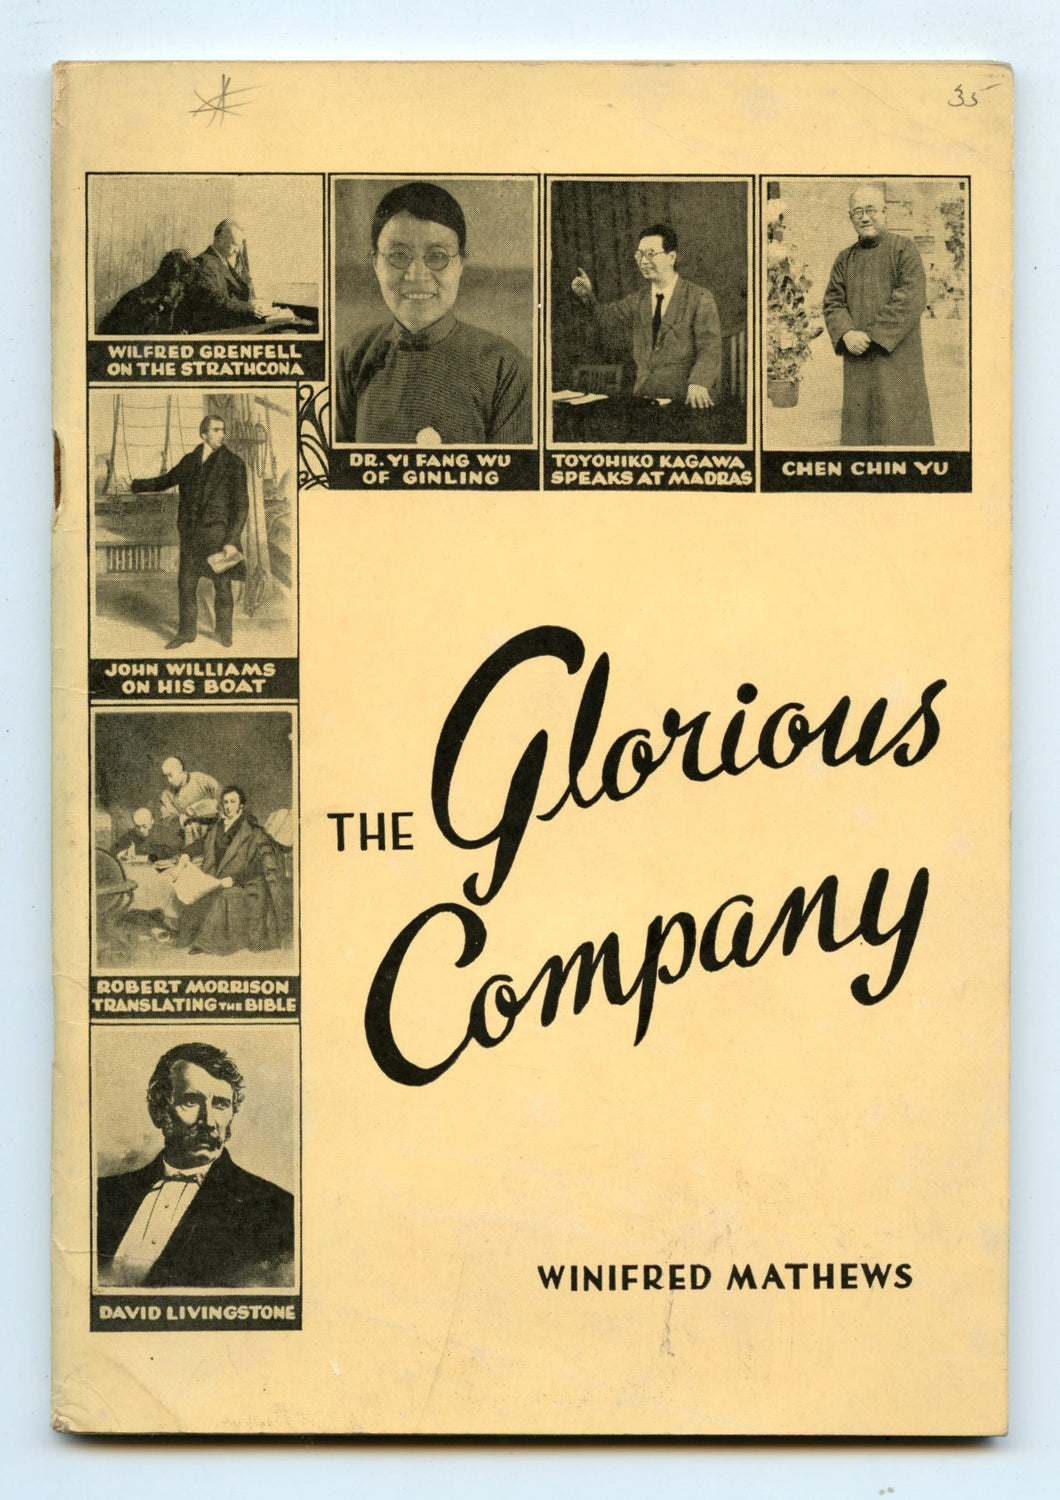 The Glorious Company